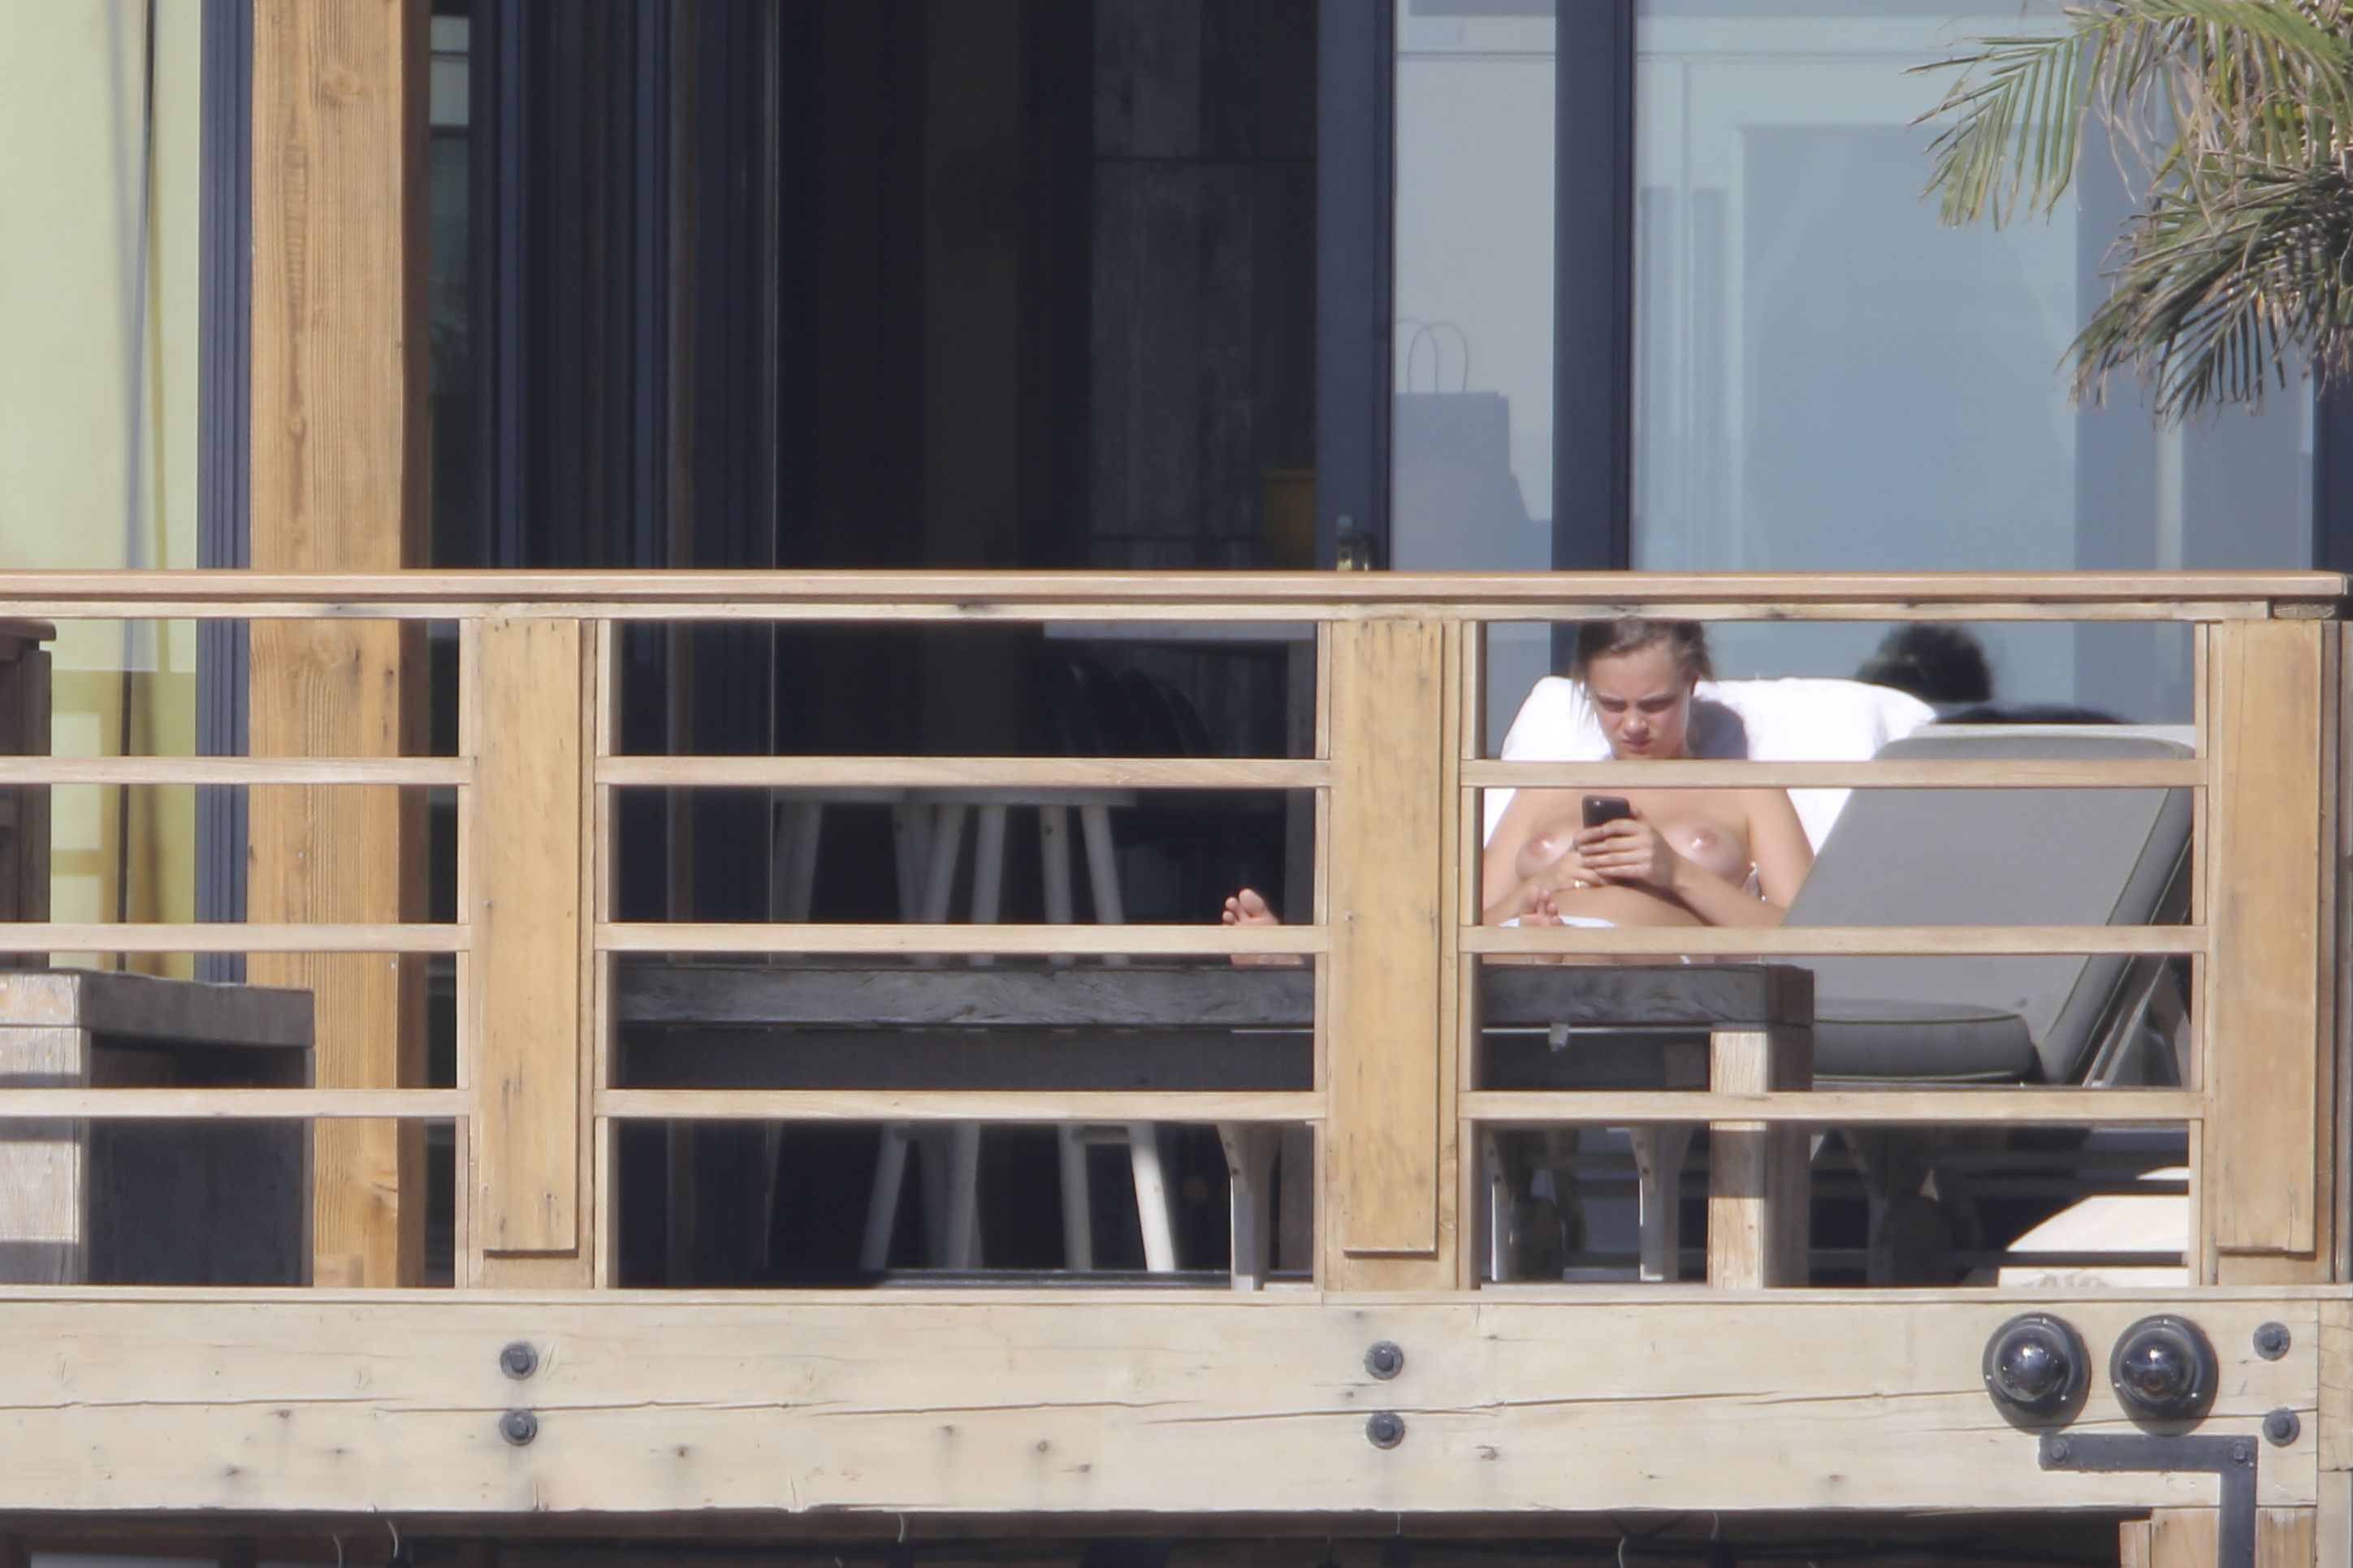 Cara_Delevingne_topless_on_a_balcony_in_Malibu_48x_HQ_34.jpg